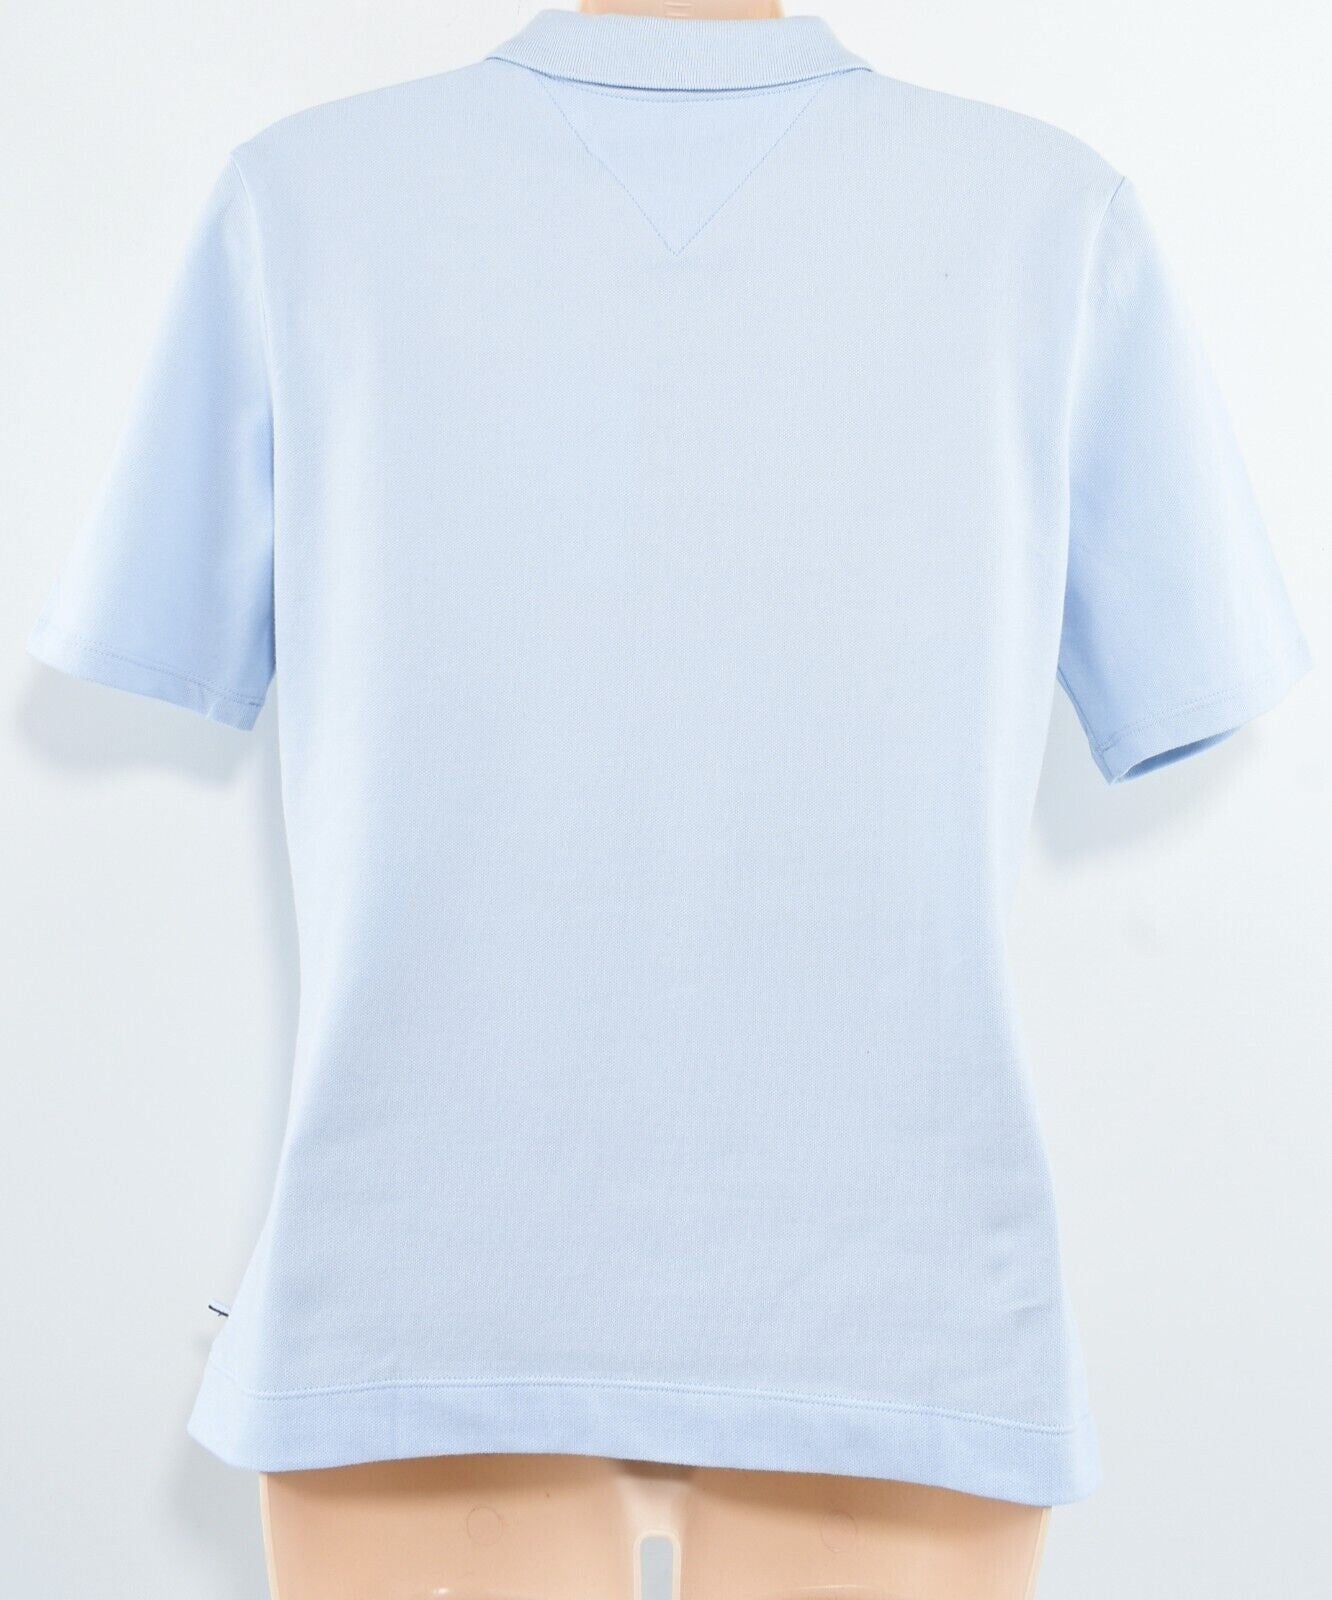 TOMMY HILFIGER Women's Classic Polo Shirt, Light Blue, size S /UK 10